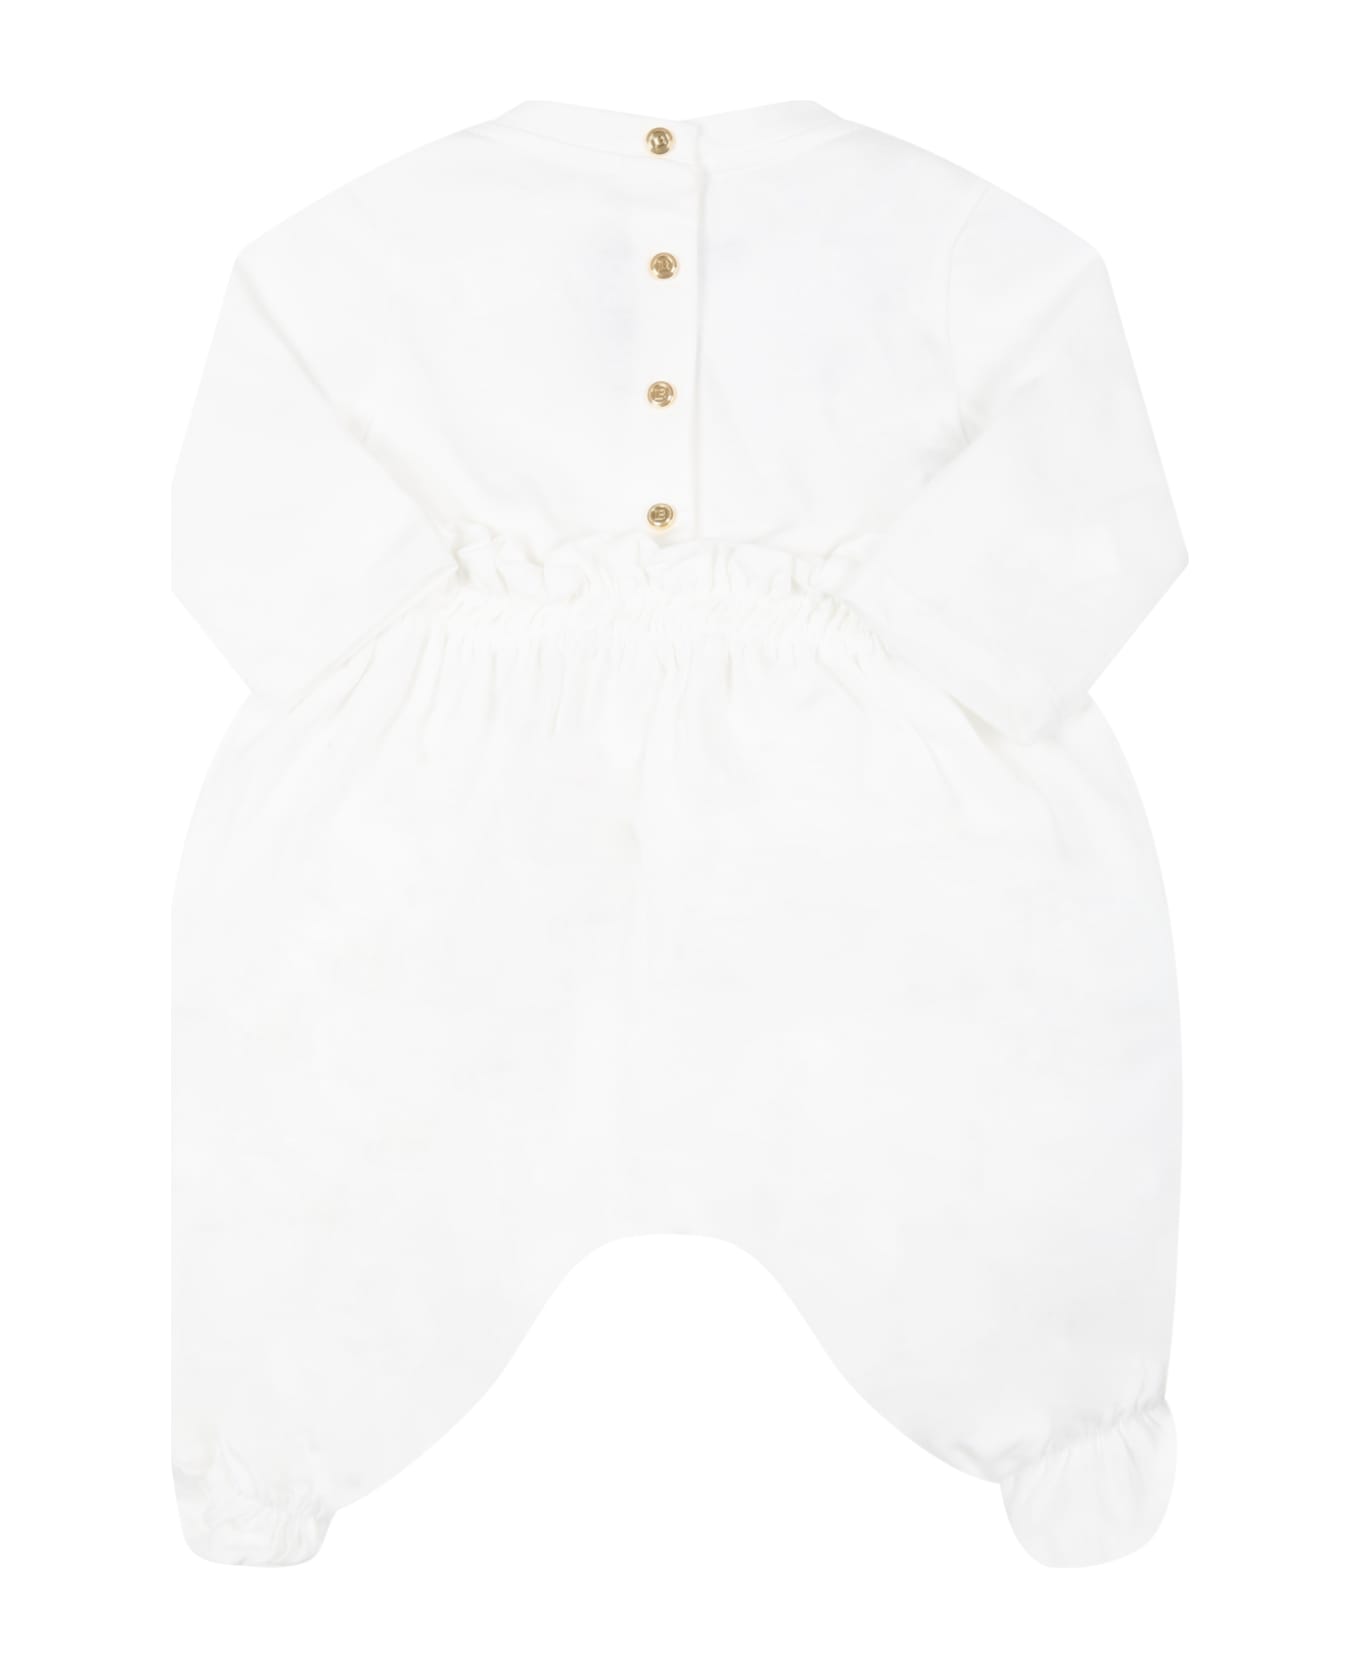 Balmain White Set For Baby Girl With Golden Logo - White